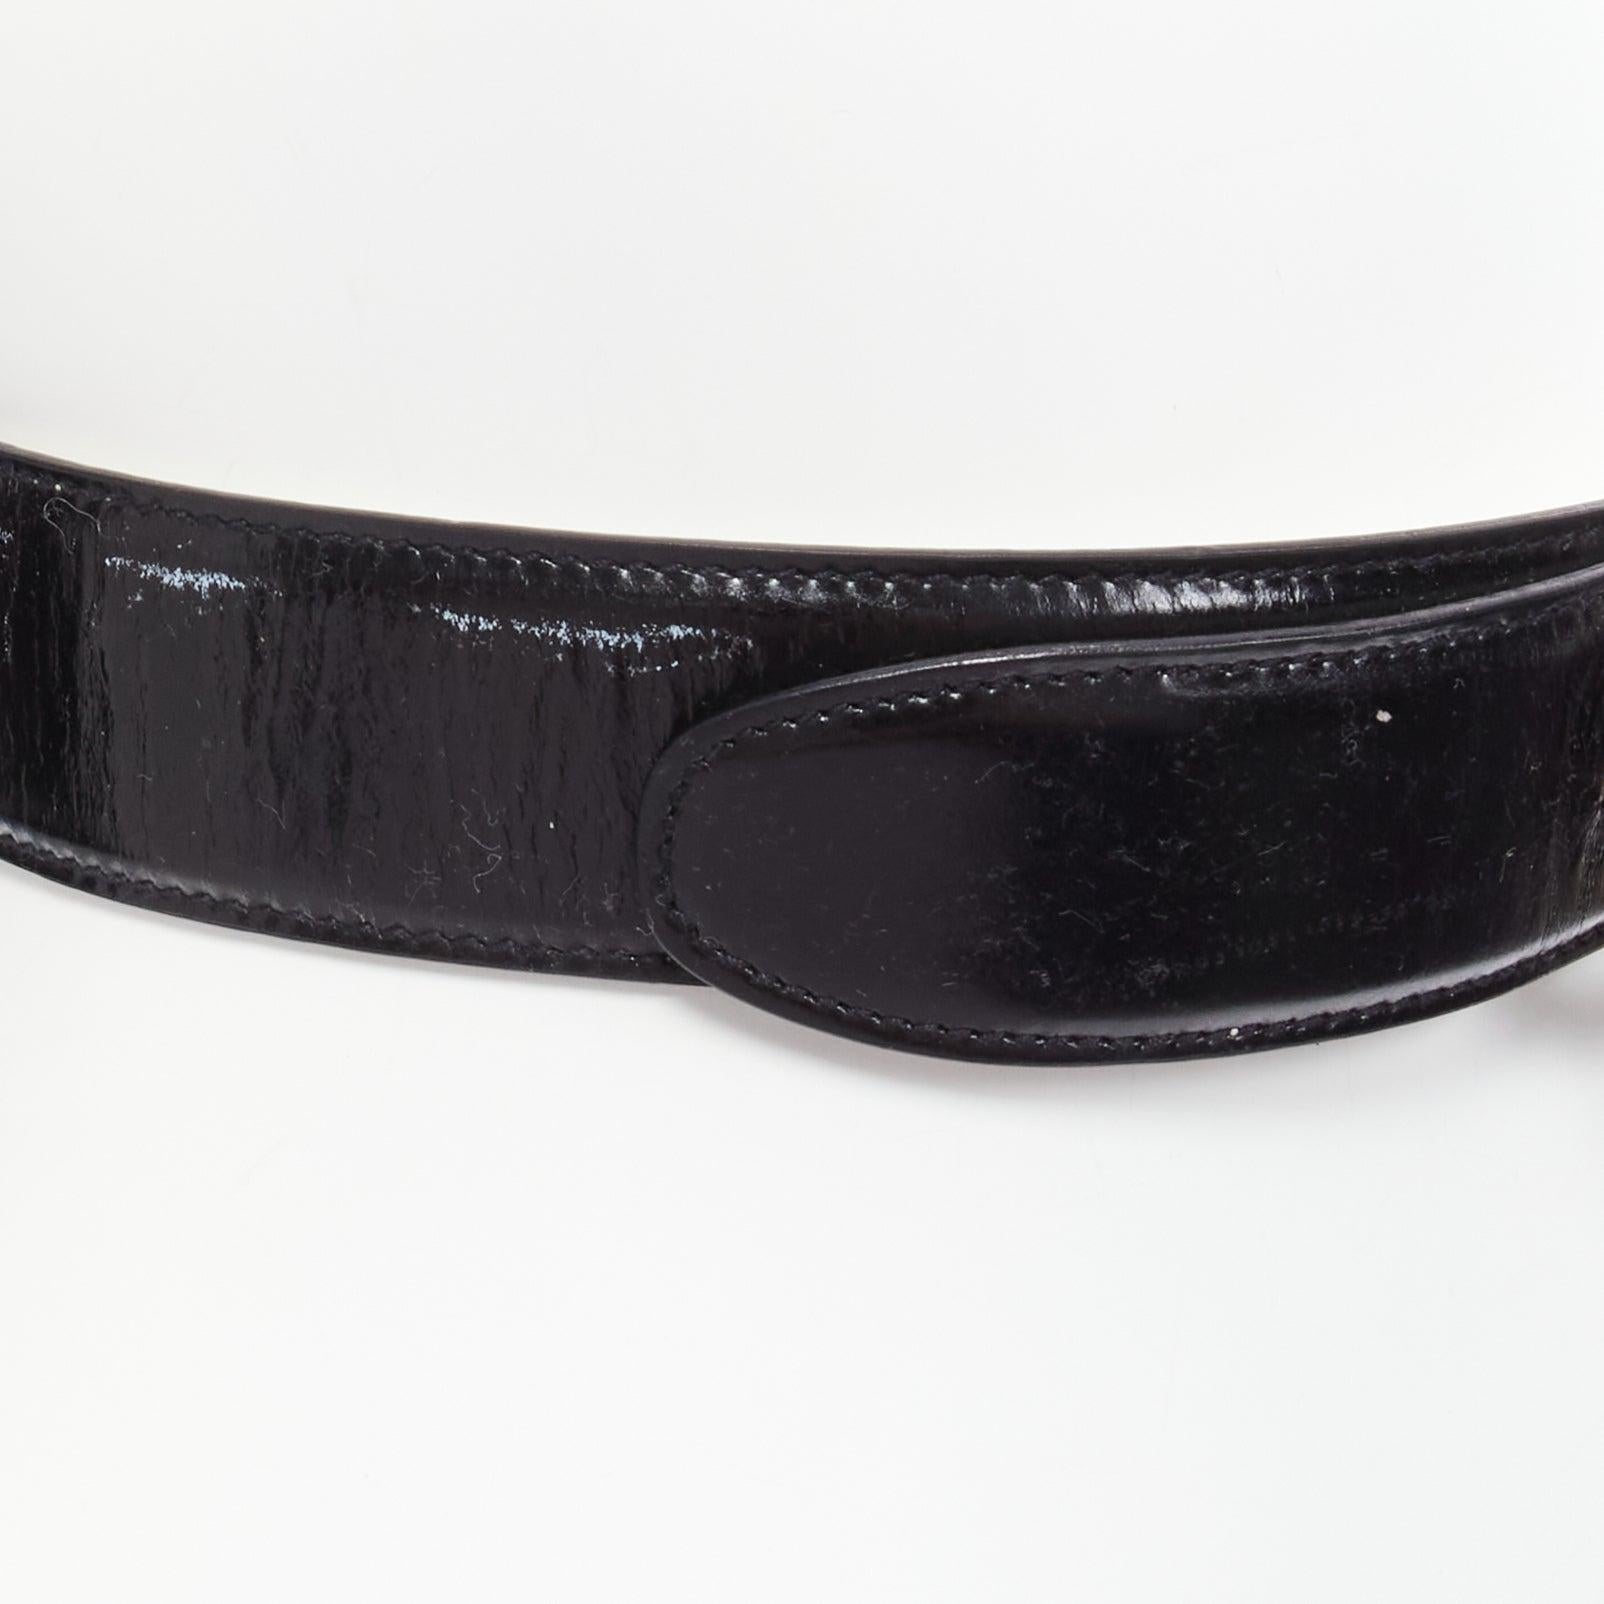 GUCCI Vintage silver GG logo buckle black smooth leather belt 30